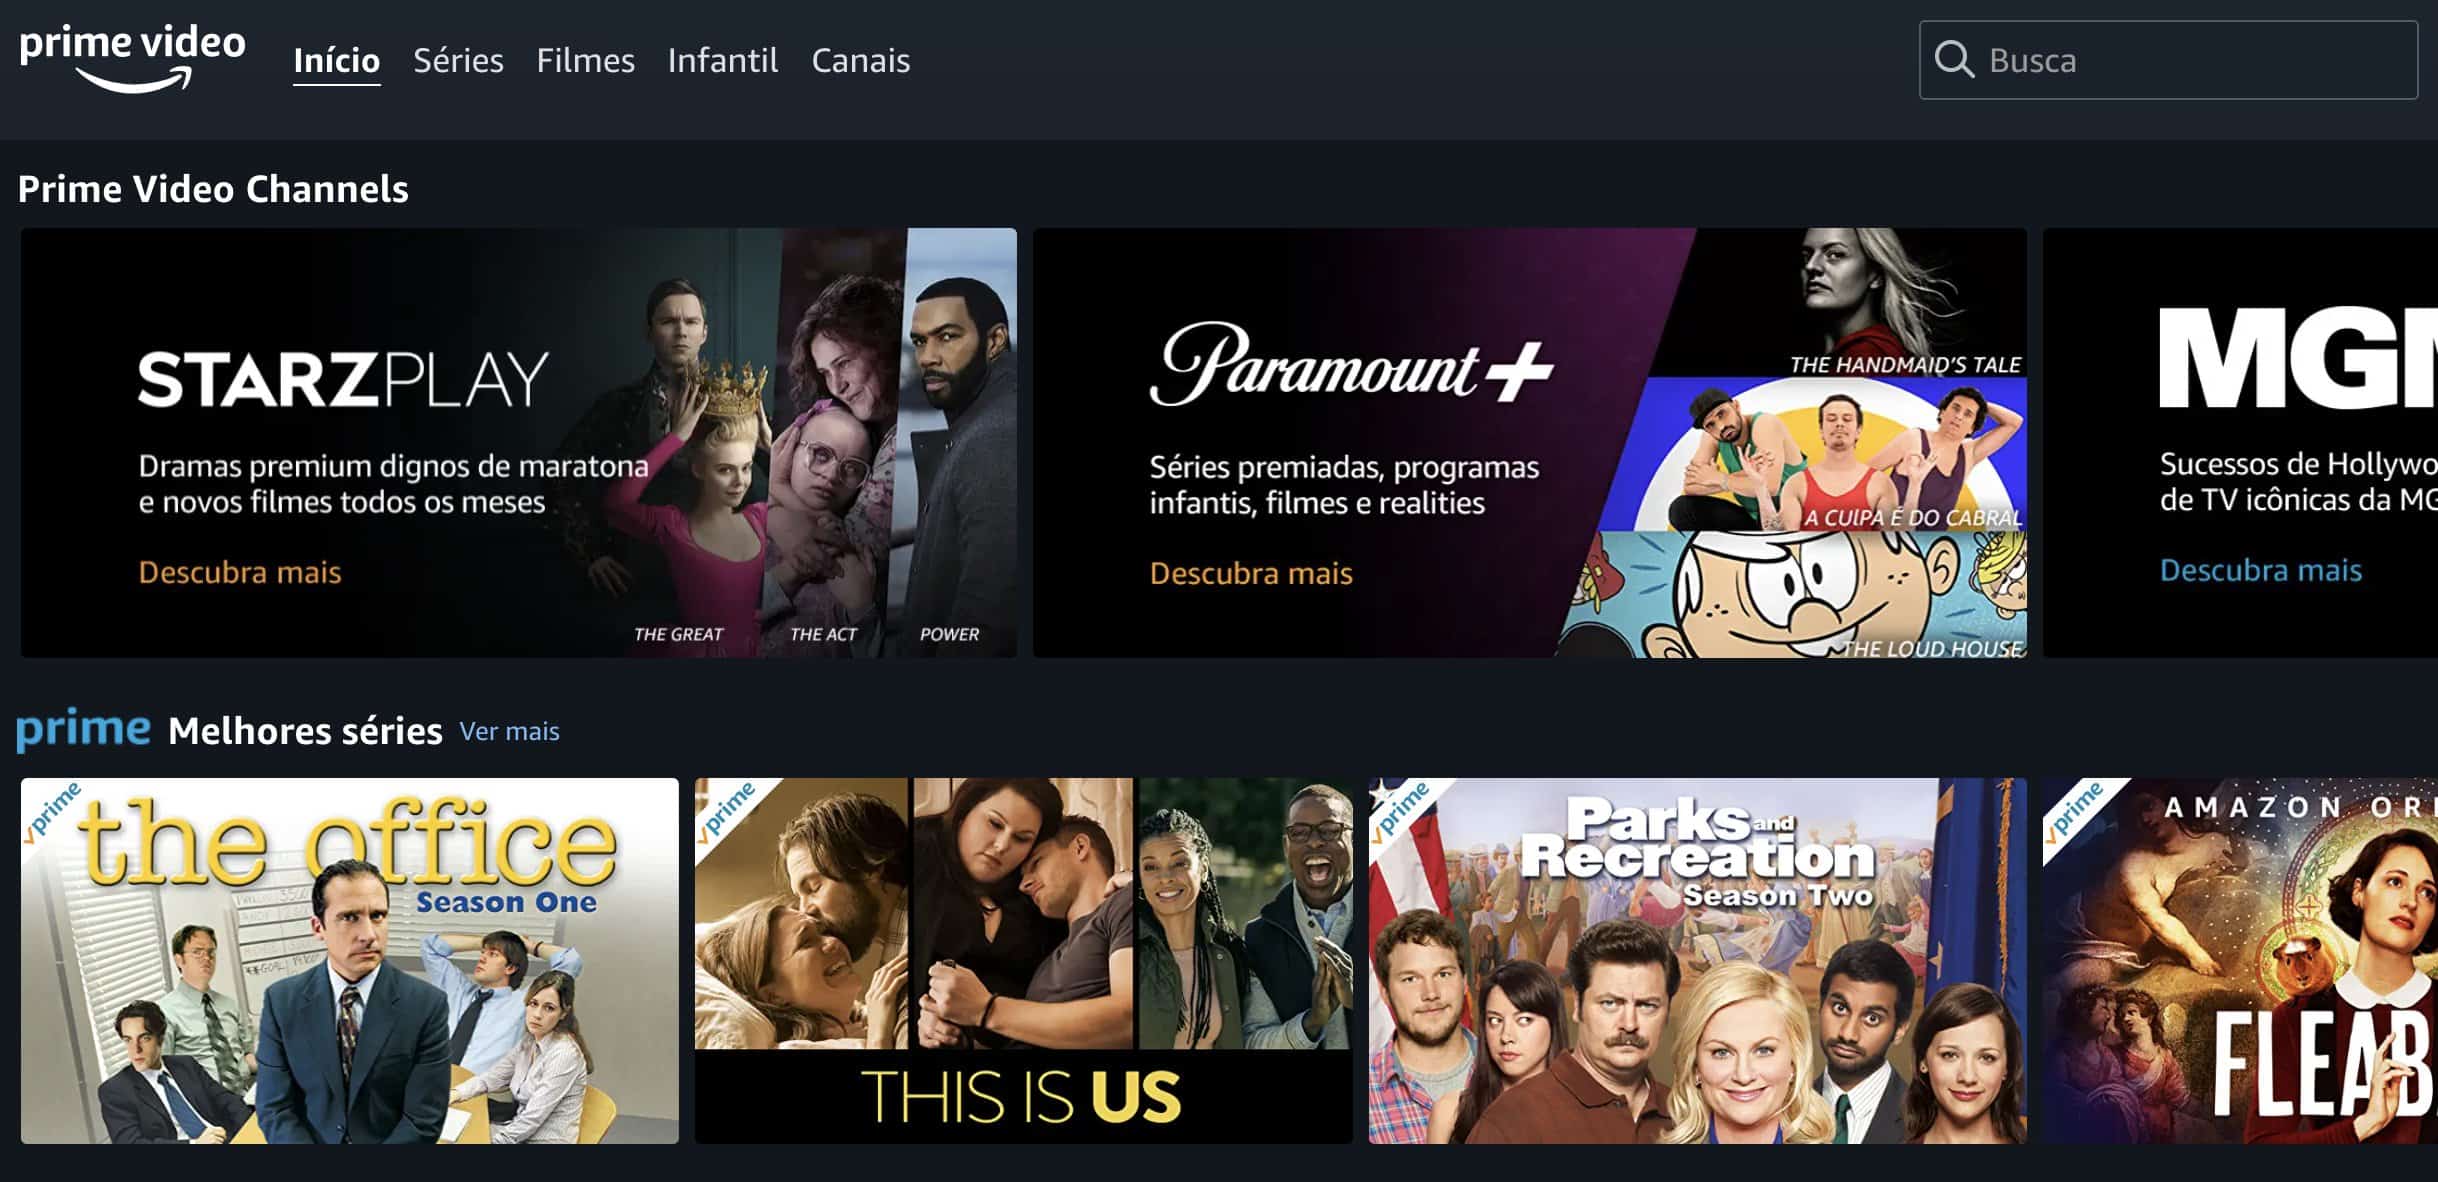 Após Globoplay, Amazon Prime Video também disponibiliza canais fechados